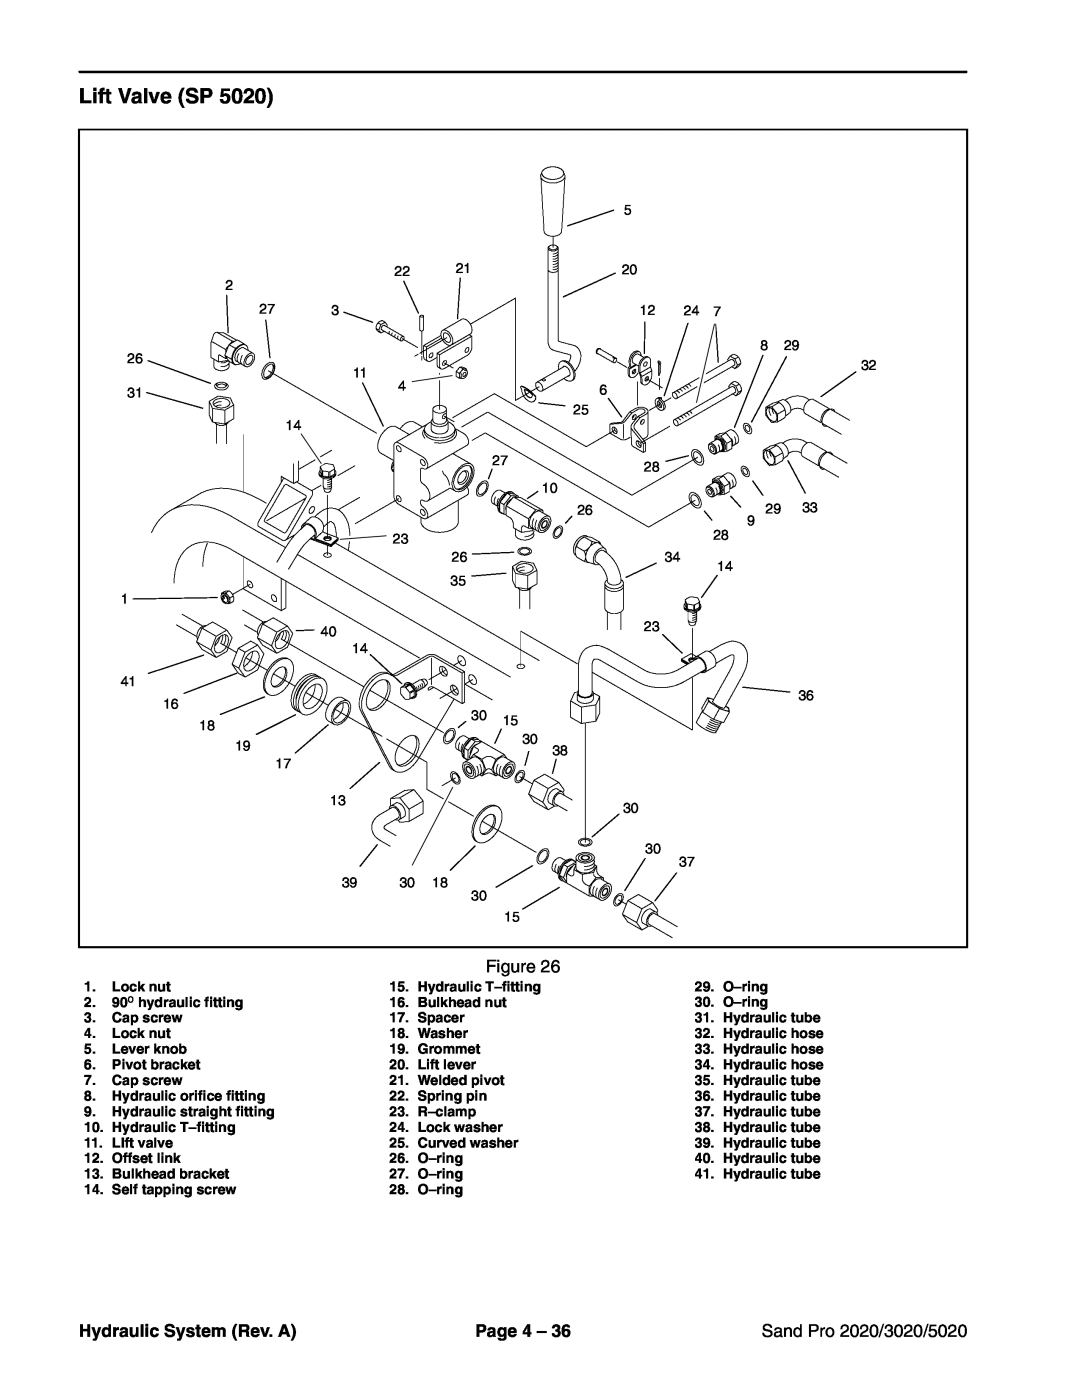 Toro service manual Lift Valve SP, Hydraulic System Rev. A, Page 4, Sand Pro 2020/3020/5020 